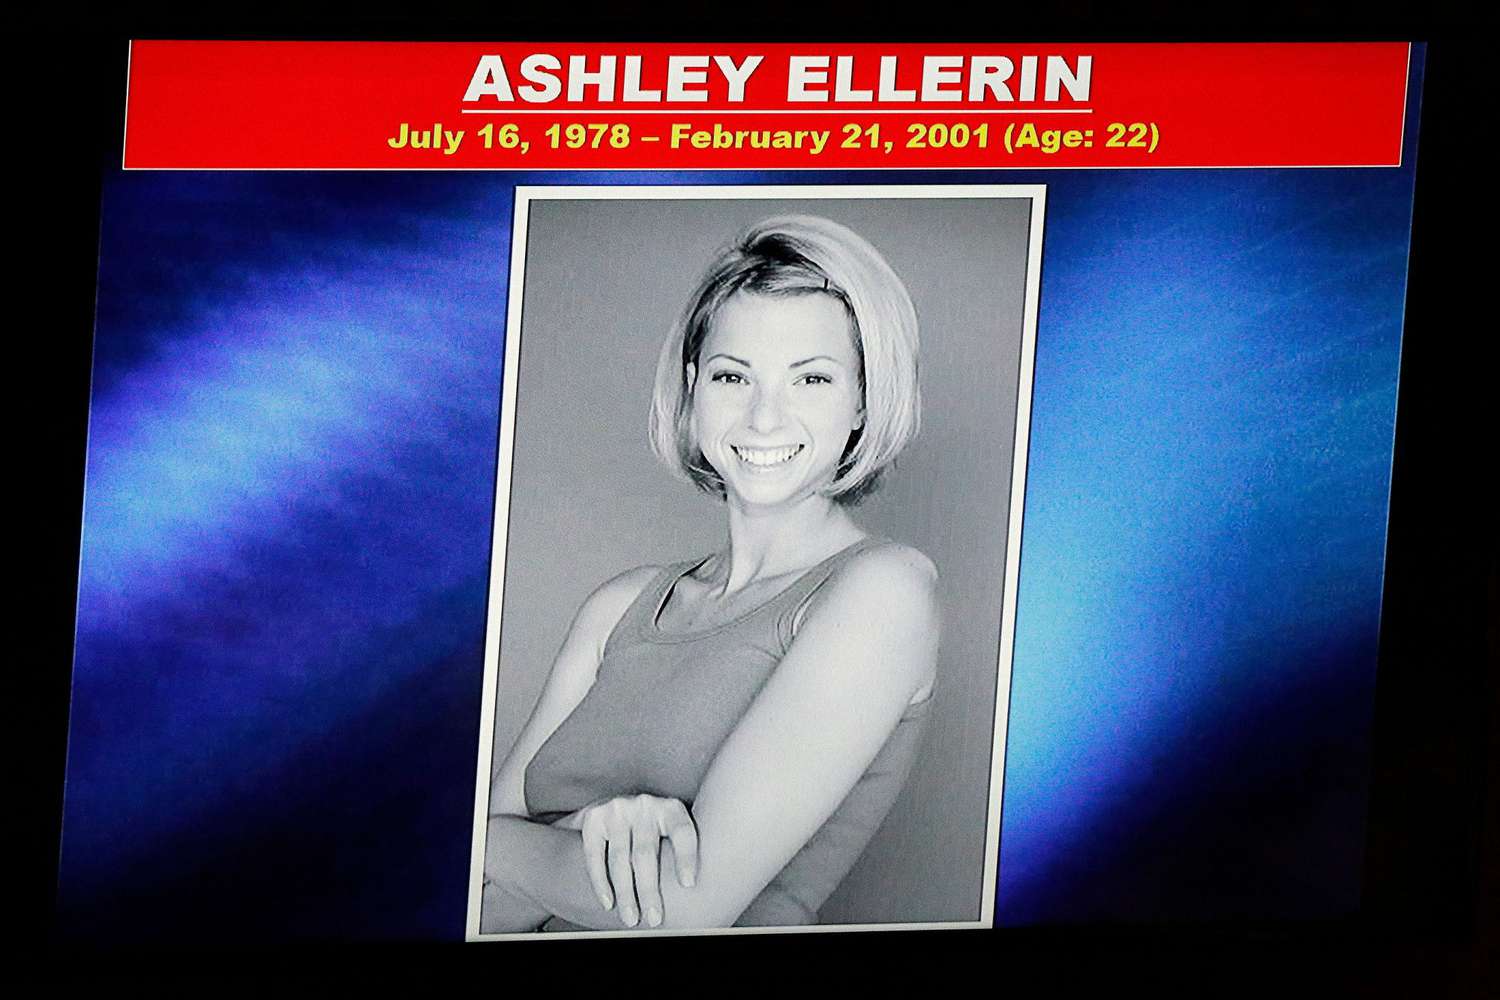 Ashley Ellerin